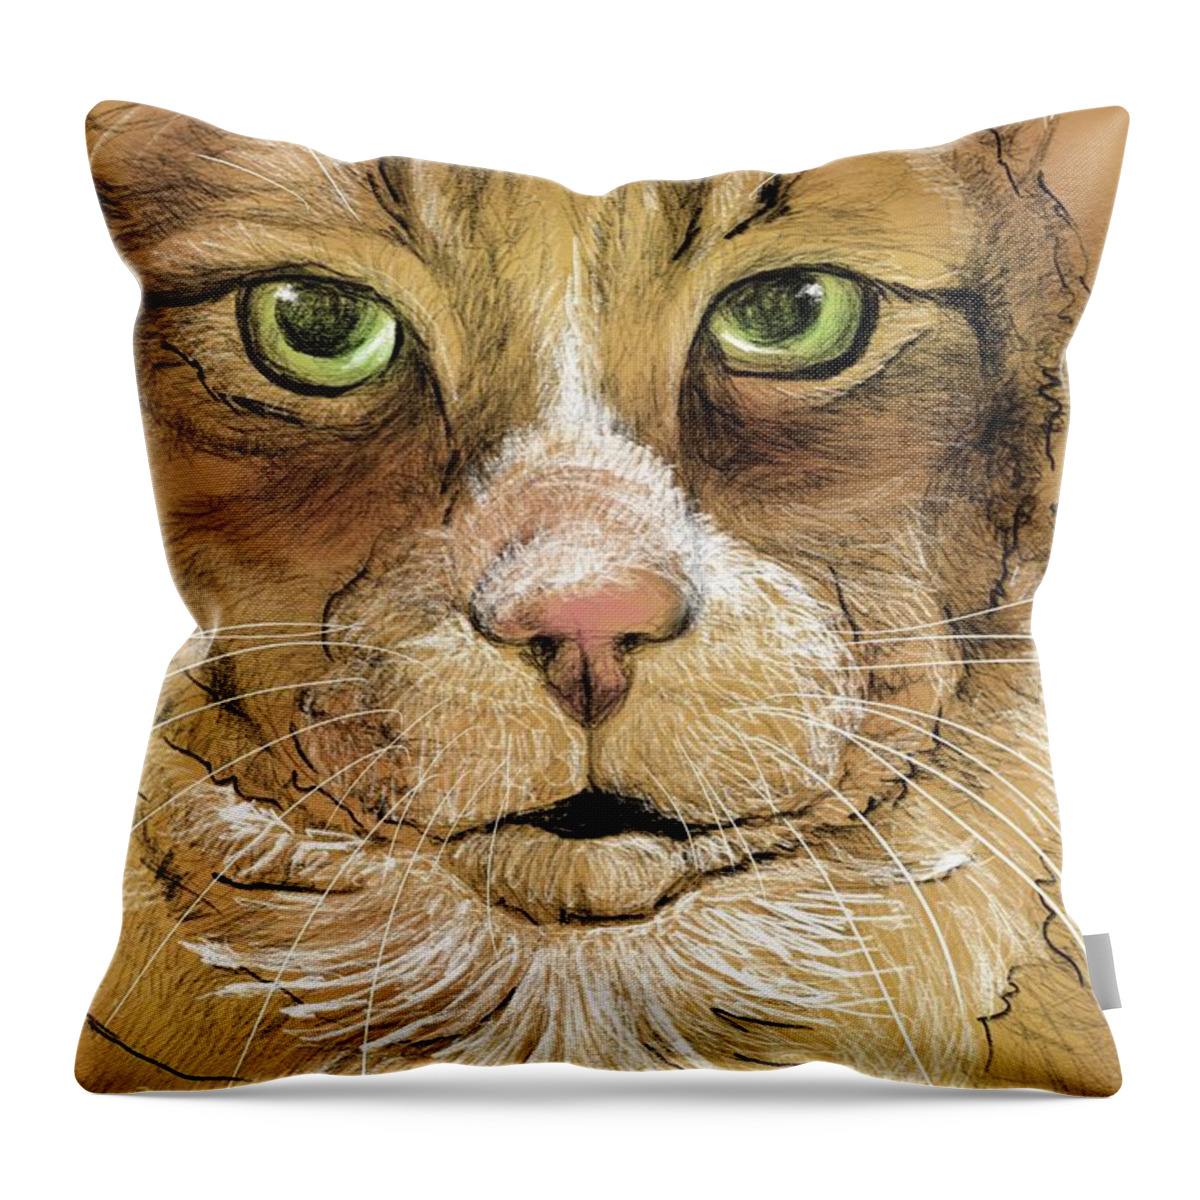 Tabby Cat Throw Pillow featuring the digital art Tabby Cat by AnneMarie Welsh